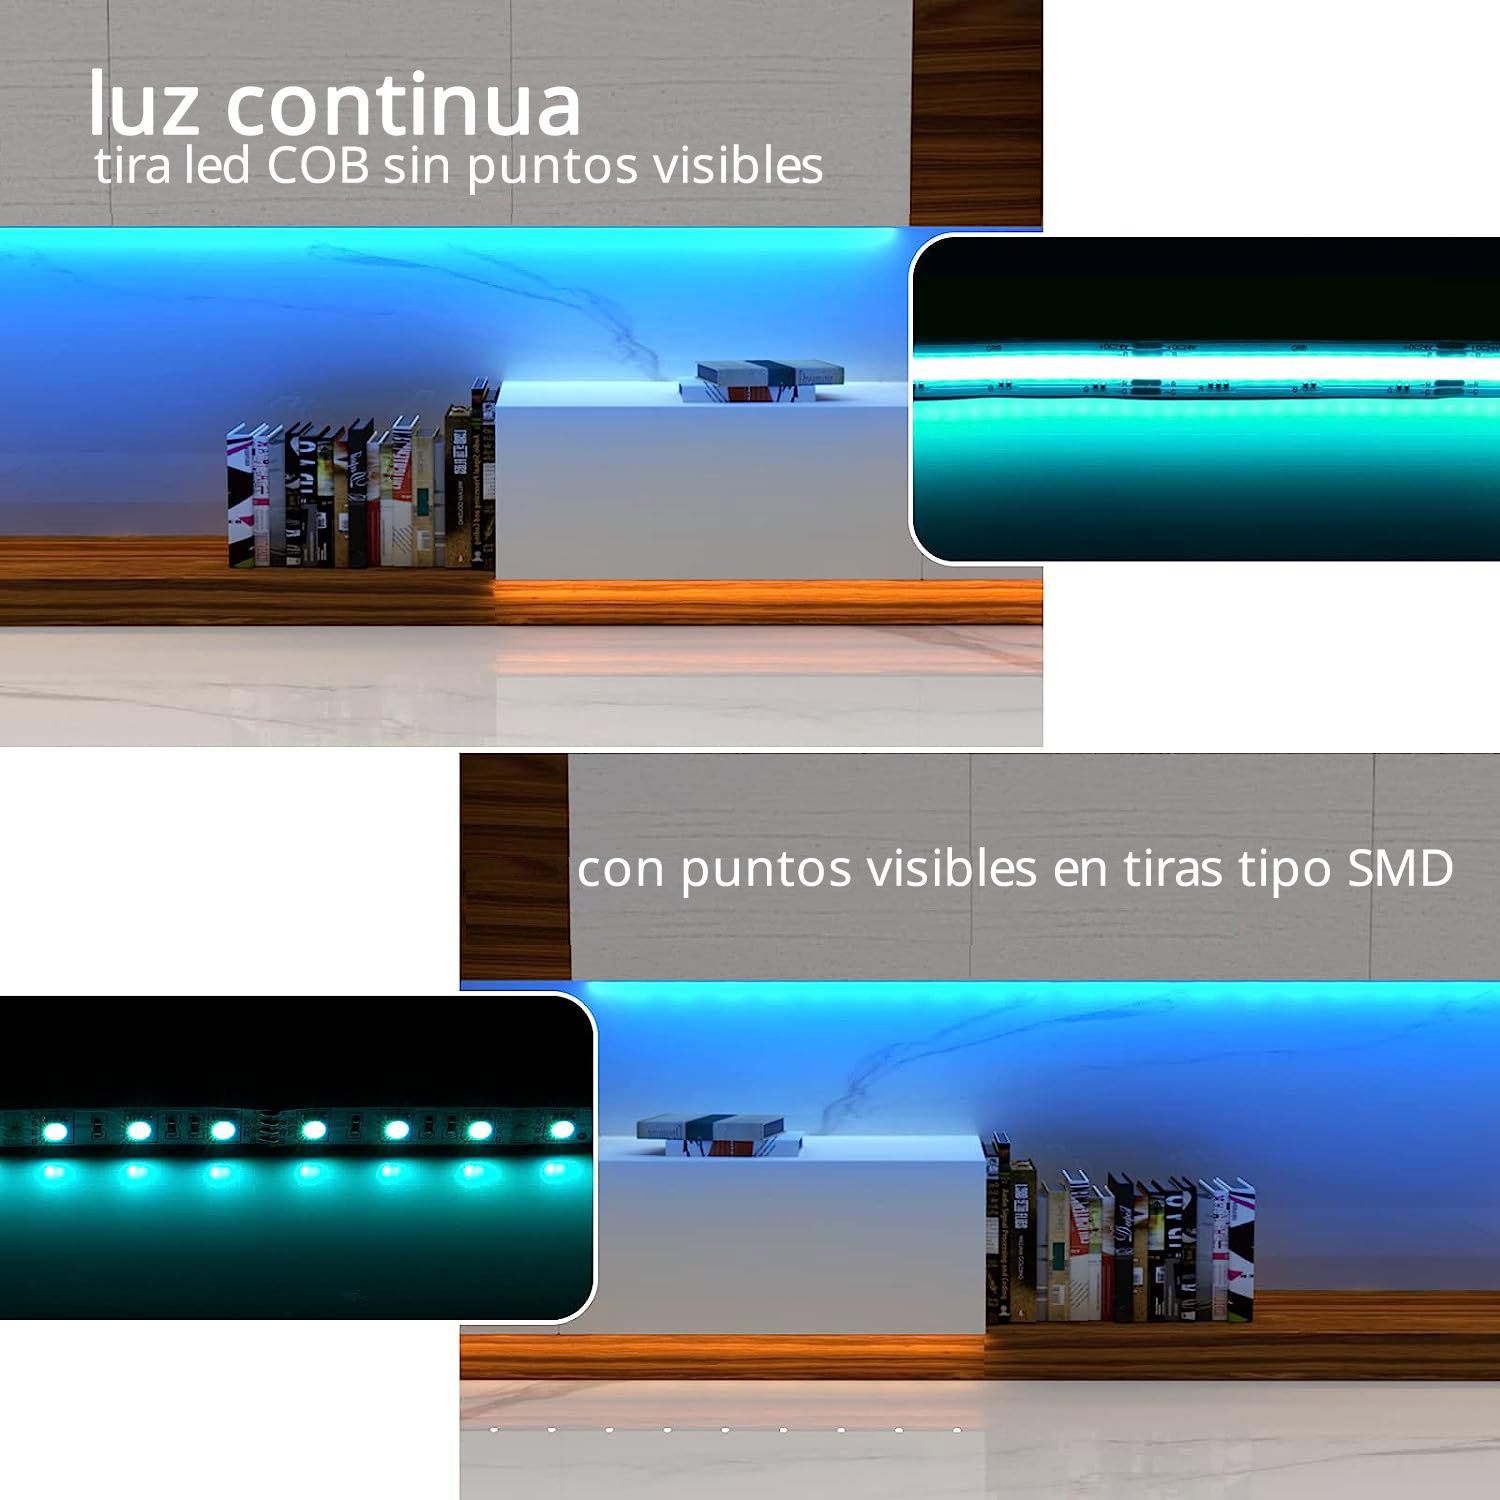 Tira LED COB, ChipLed Samsung, DC24V, 20 metros (240Led/m), 300W